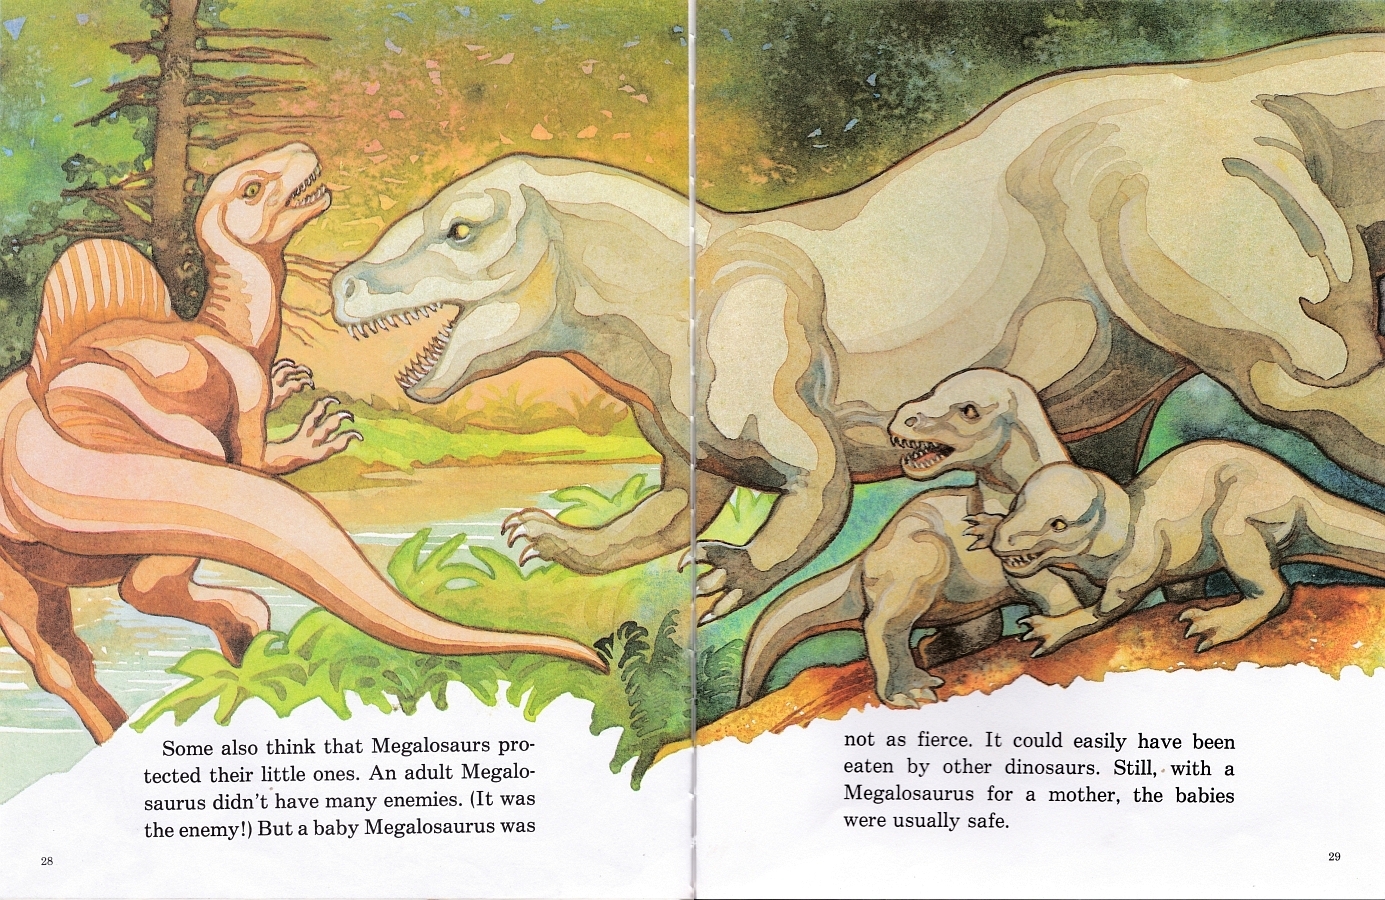 Megalosaurus protecting young by Diana Magnuson